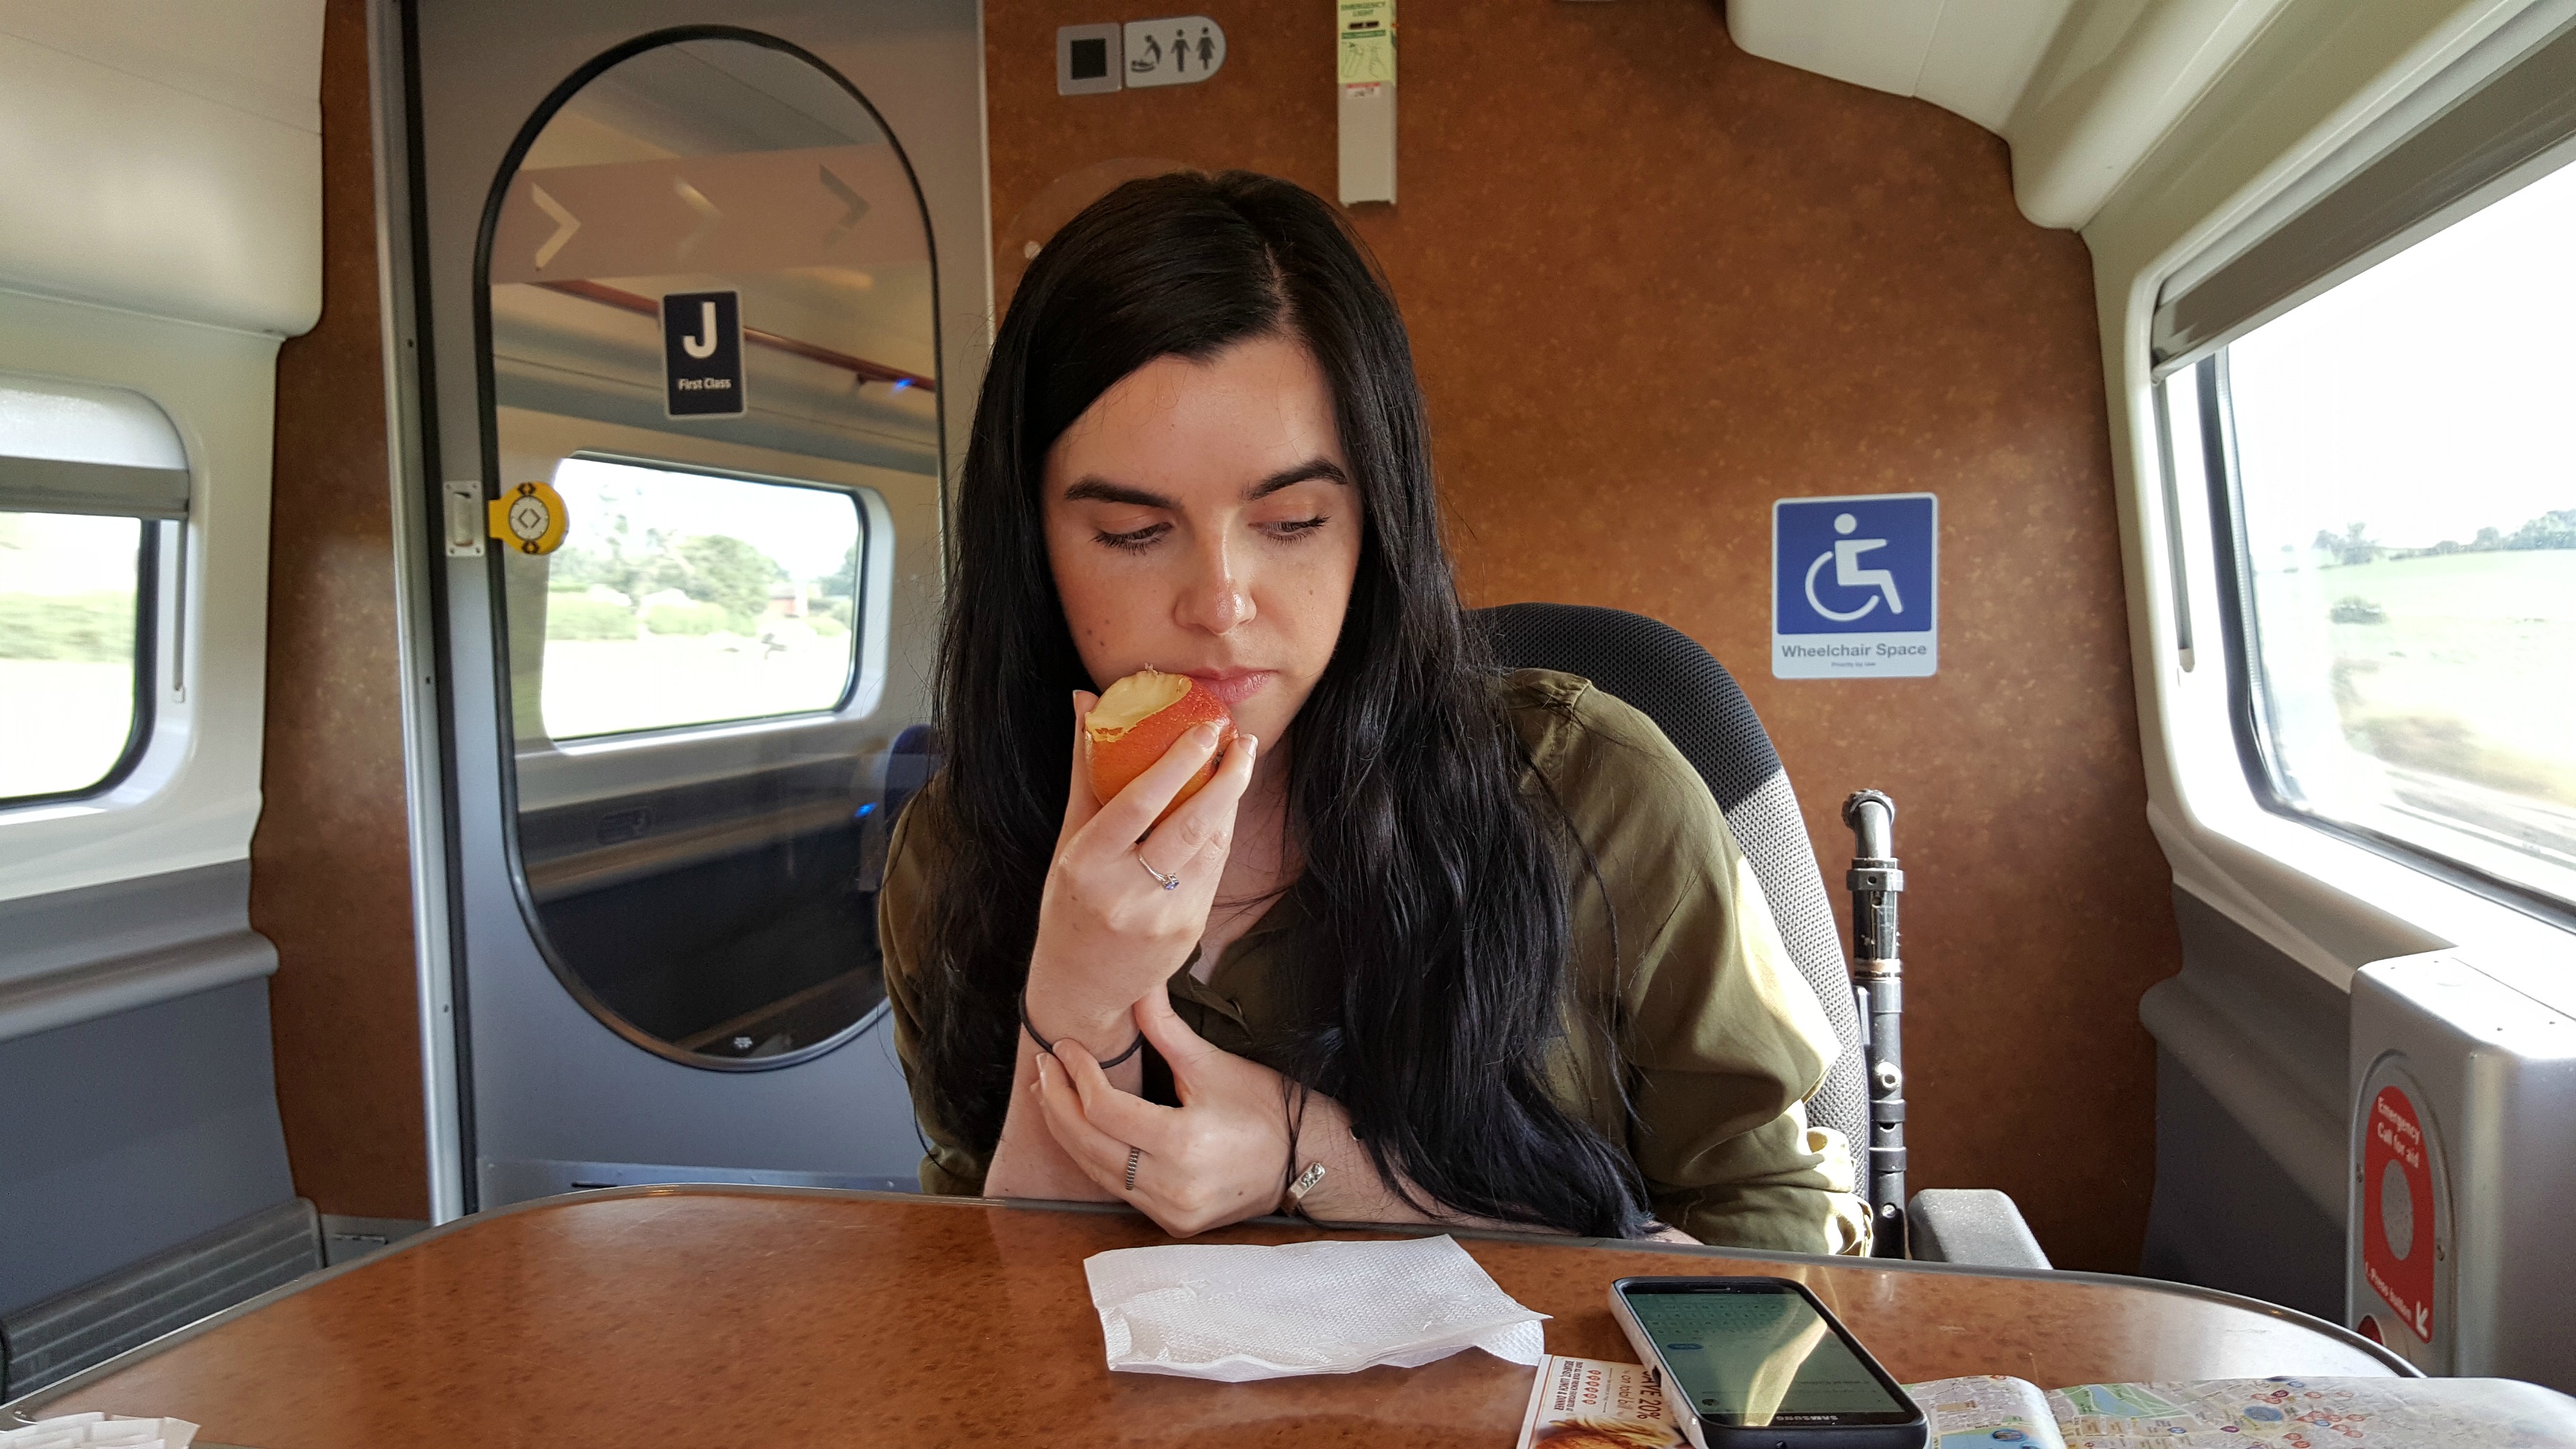 Virgin Trains first class menu vegan food options (2)